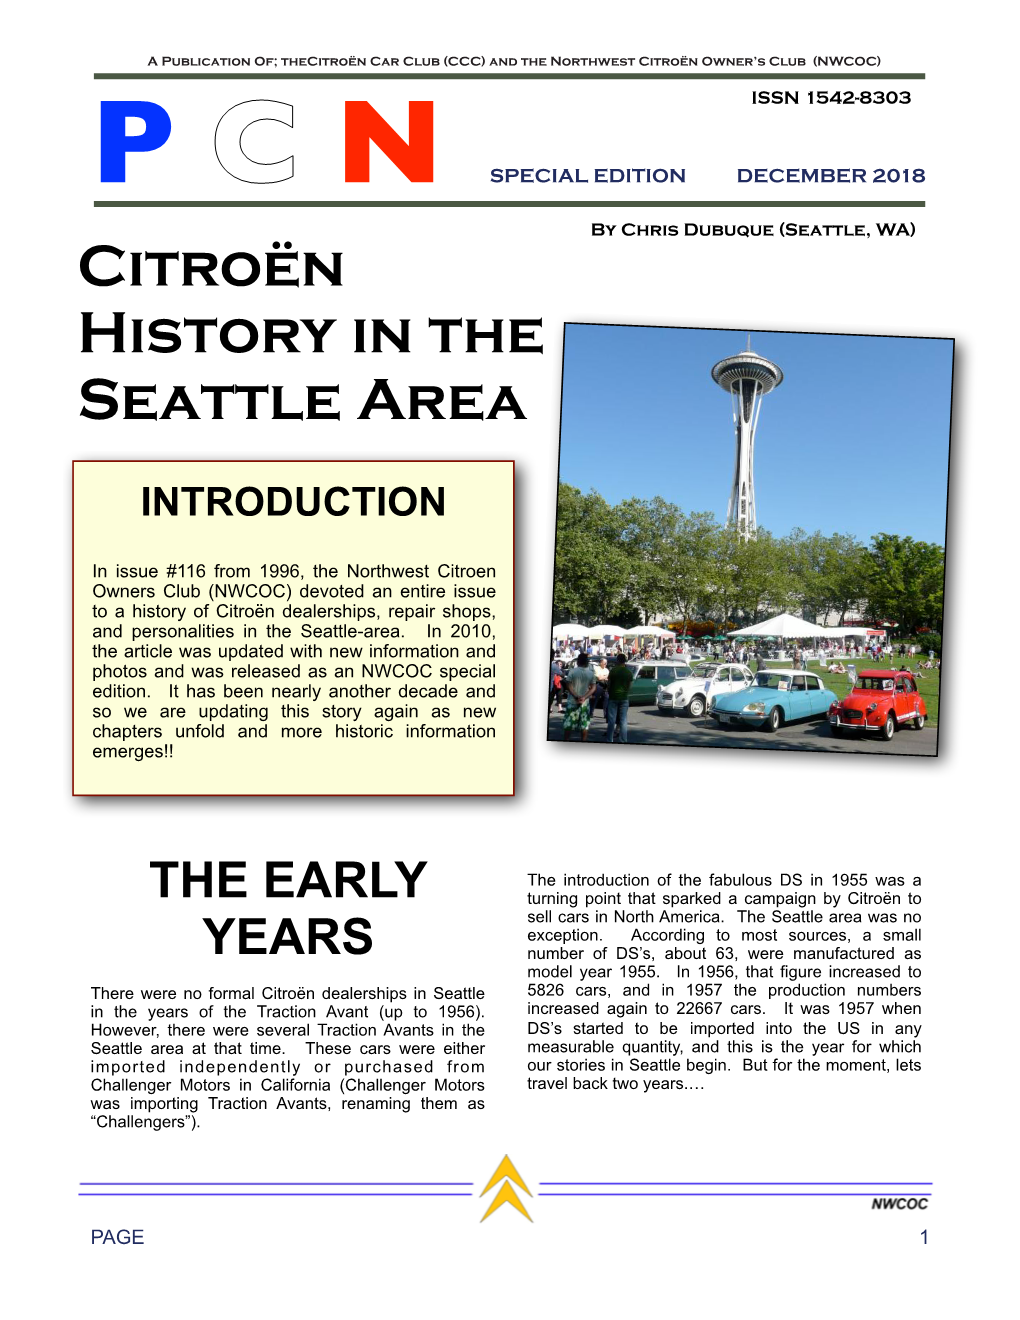 Citroen History 2018